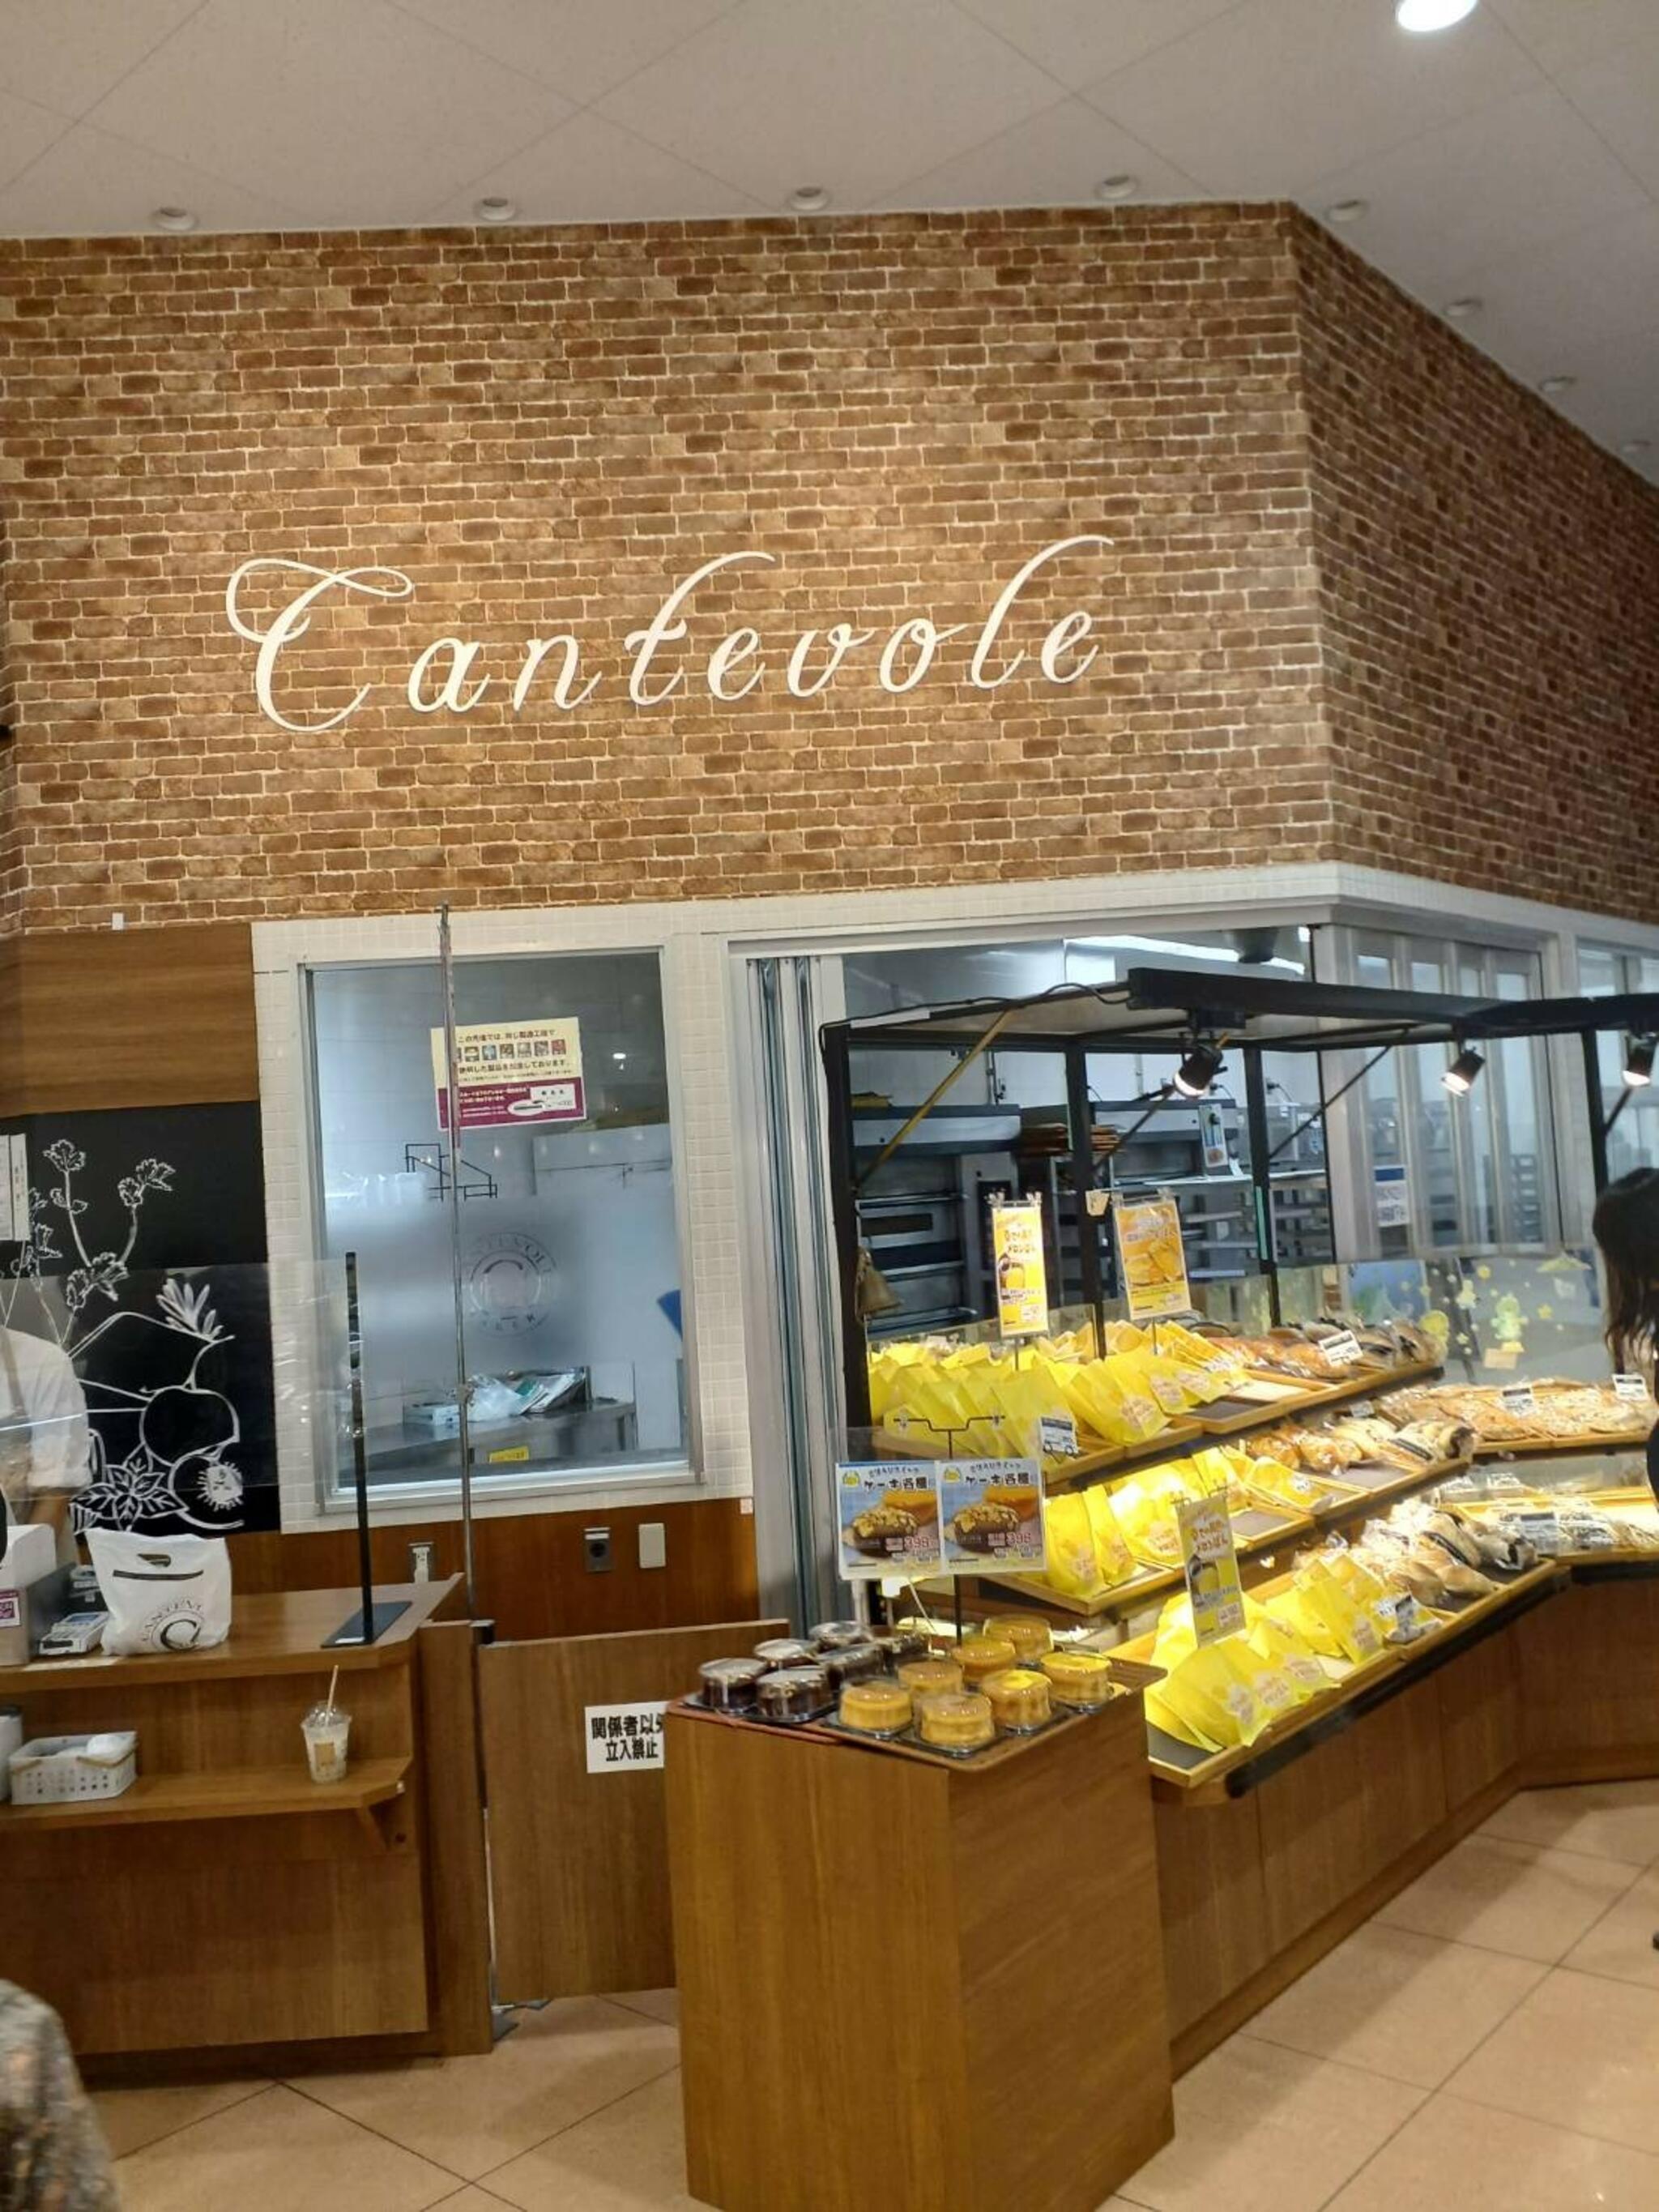 Cantevole 土浦店の代表写真9